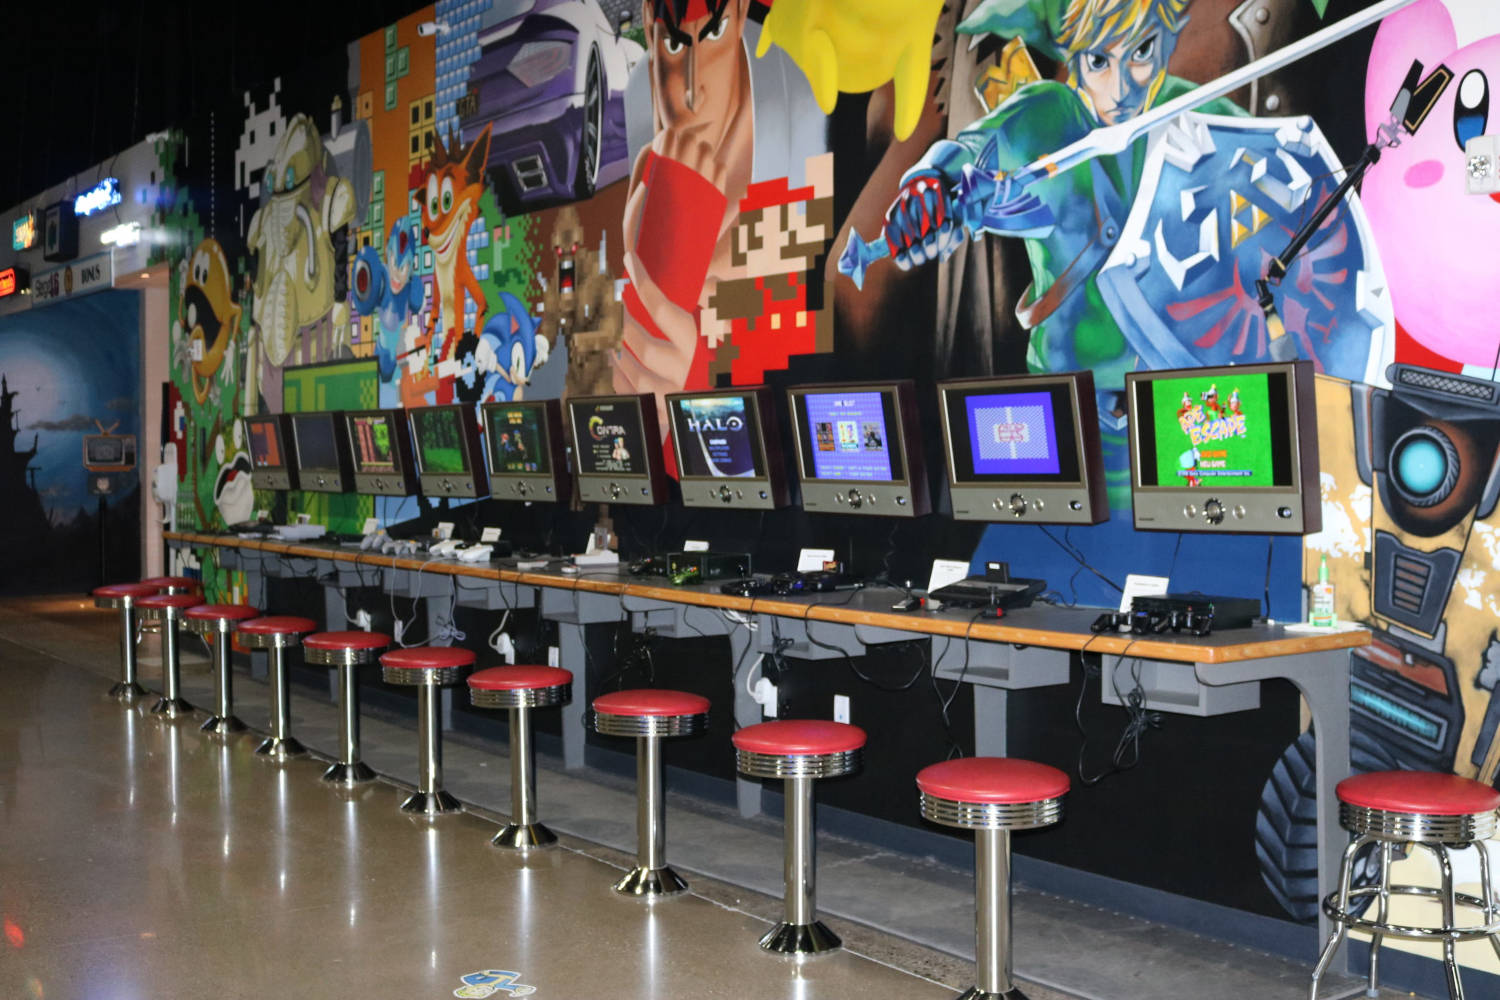 arcade tour